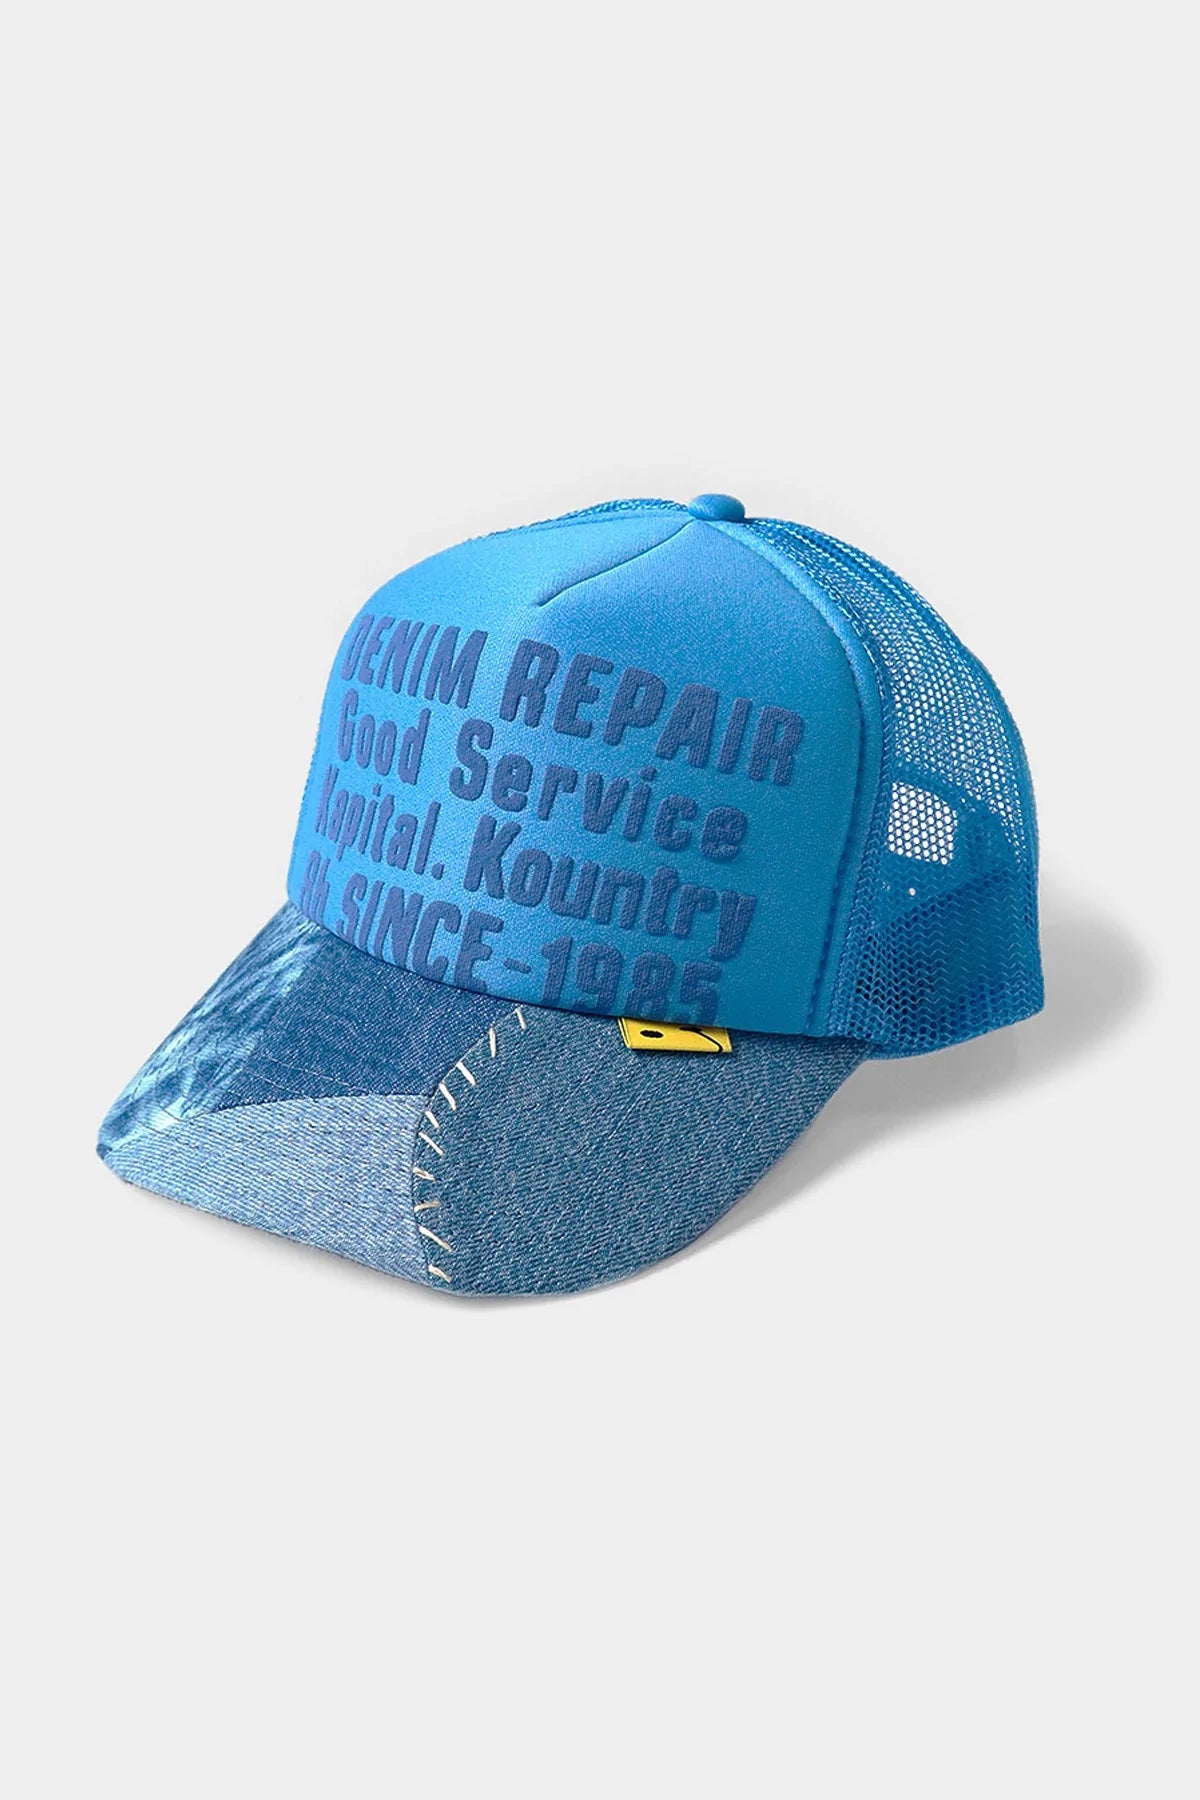 Kapital Denim Repair Service Denim Reconstruction Truck Cap